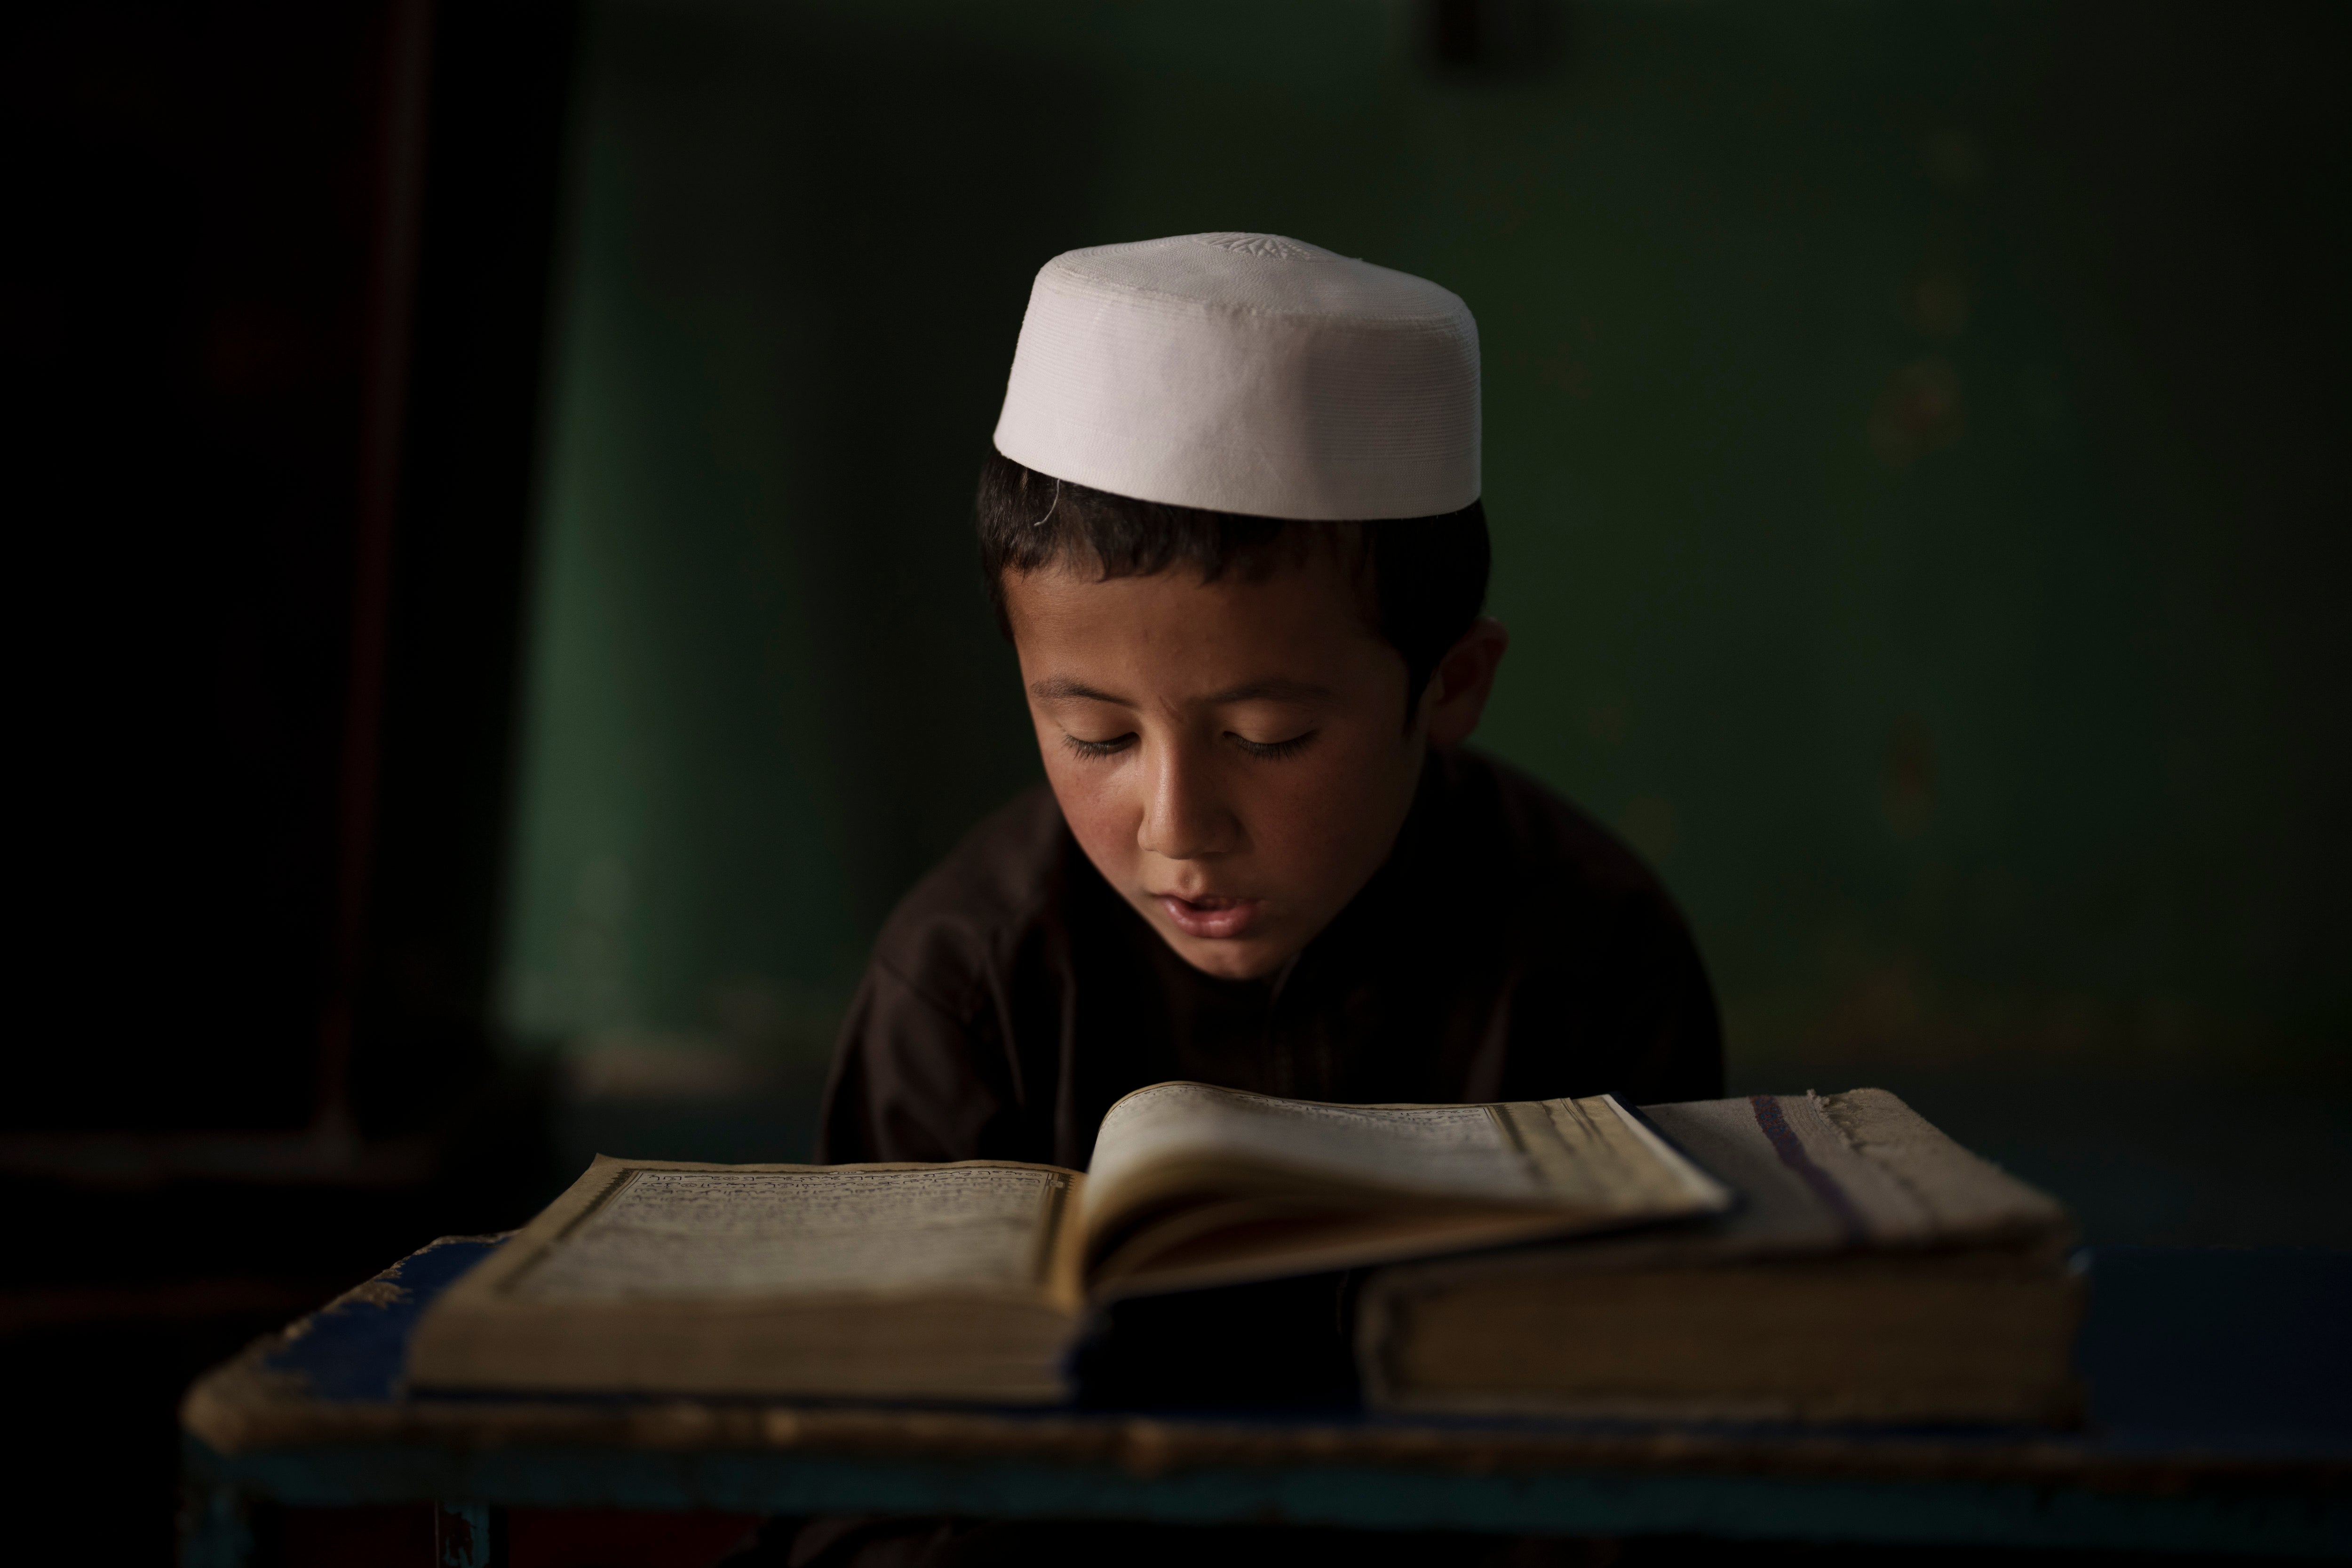 Afghanistan Madrasa Photo Gallery